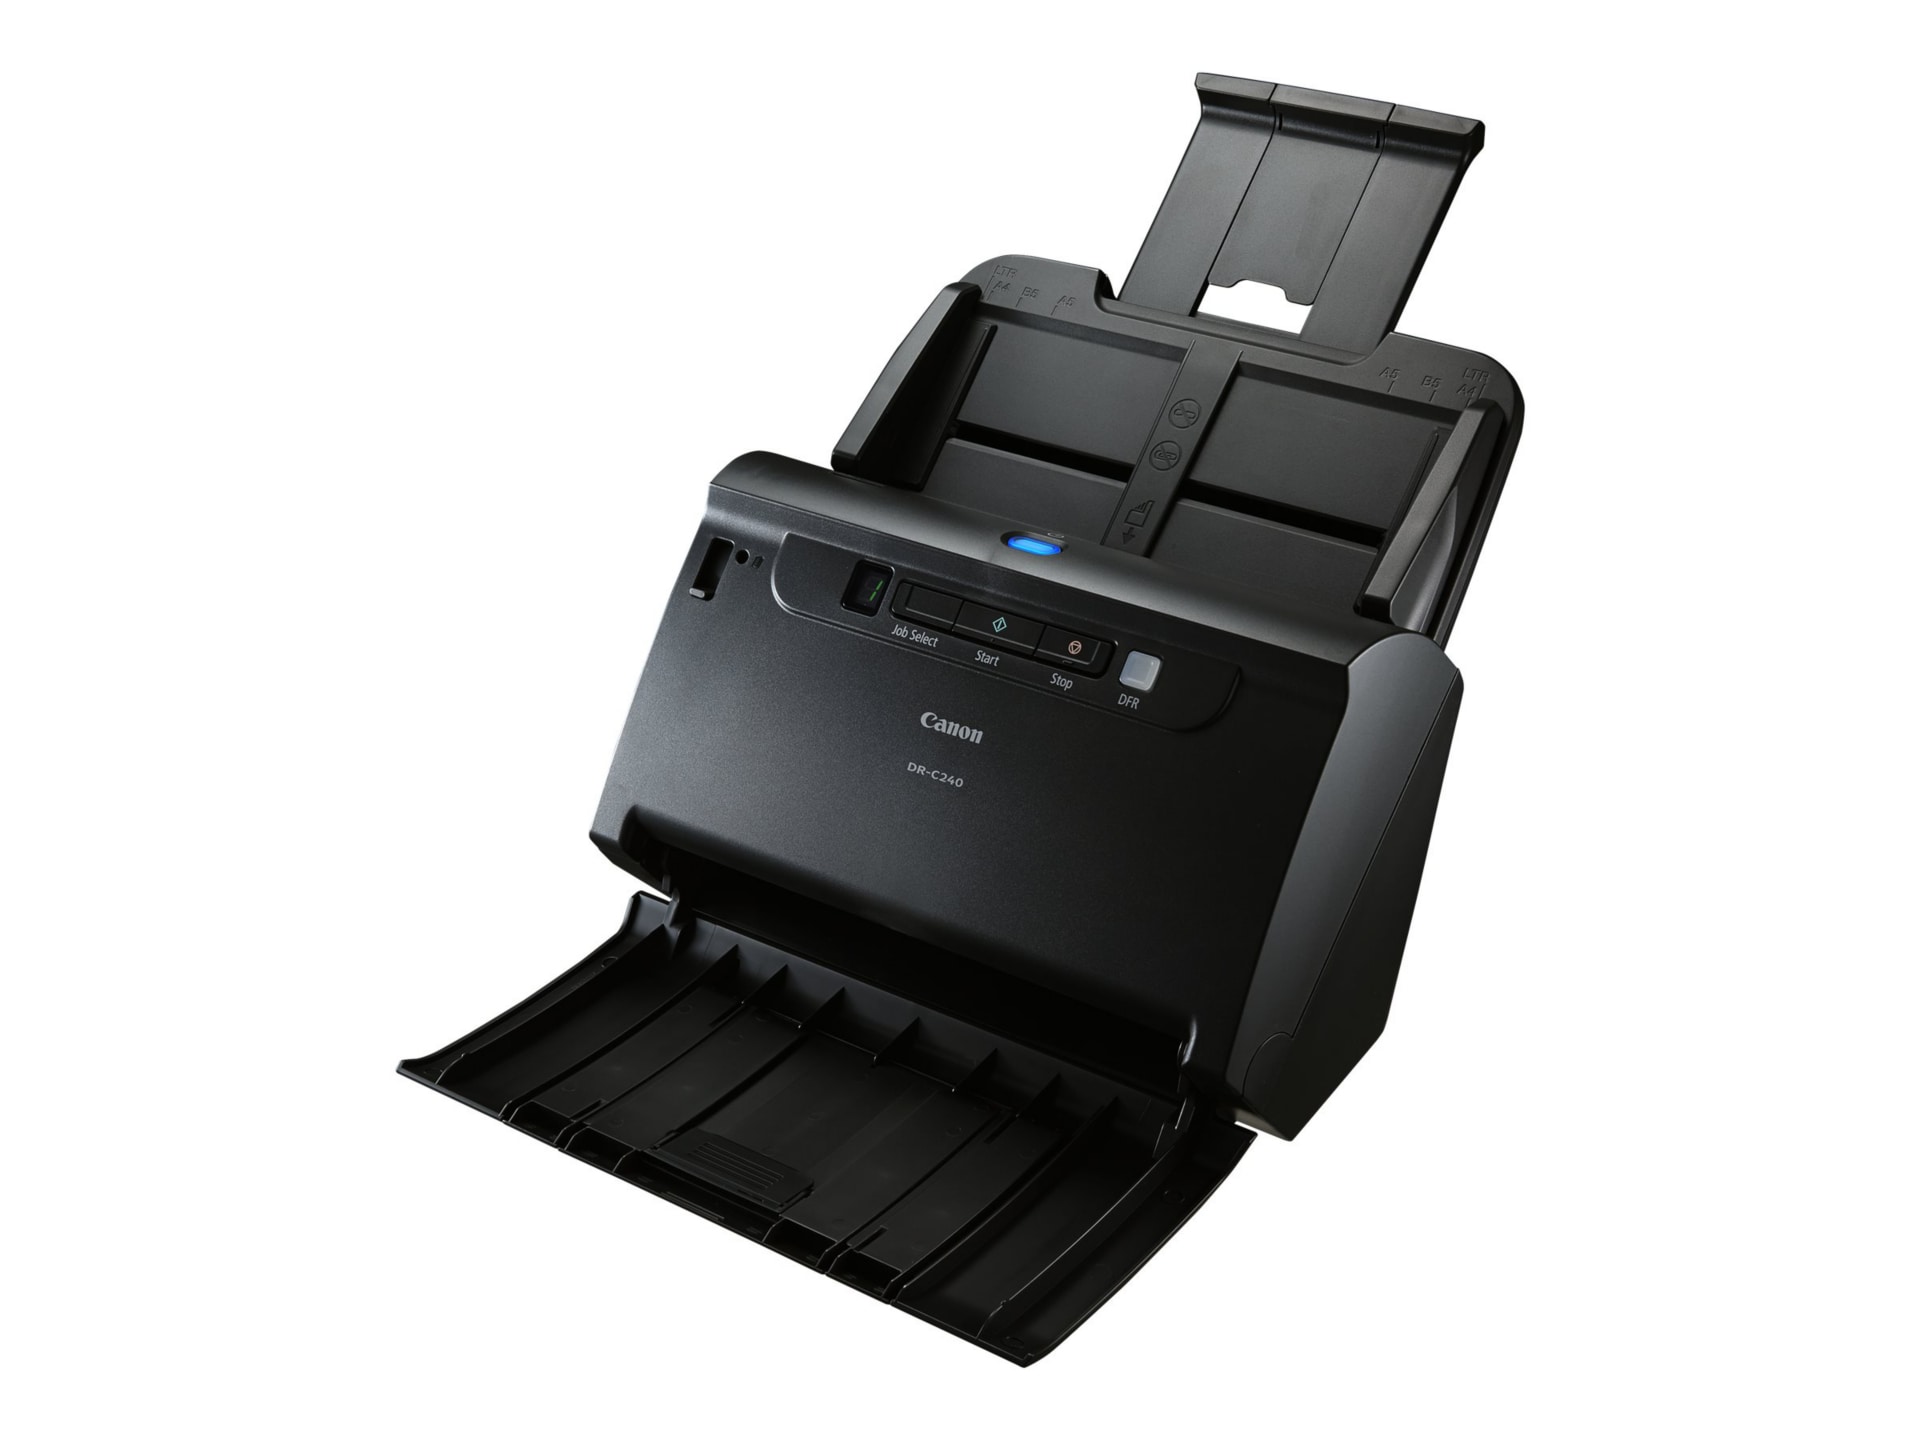 Canon imageFORMULA DR-C240 Office - document scanner - desktop - USB 2.0 -  0651C002 - Document Scanners 